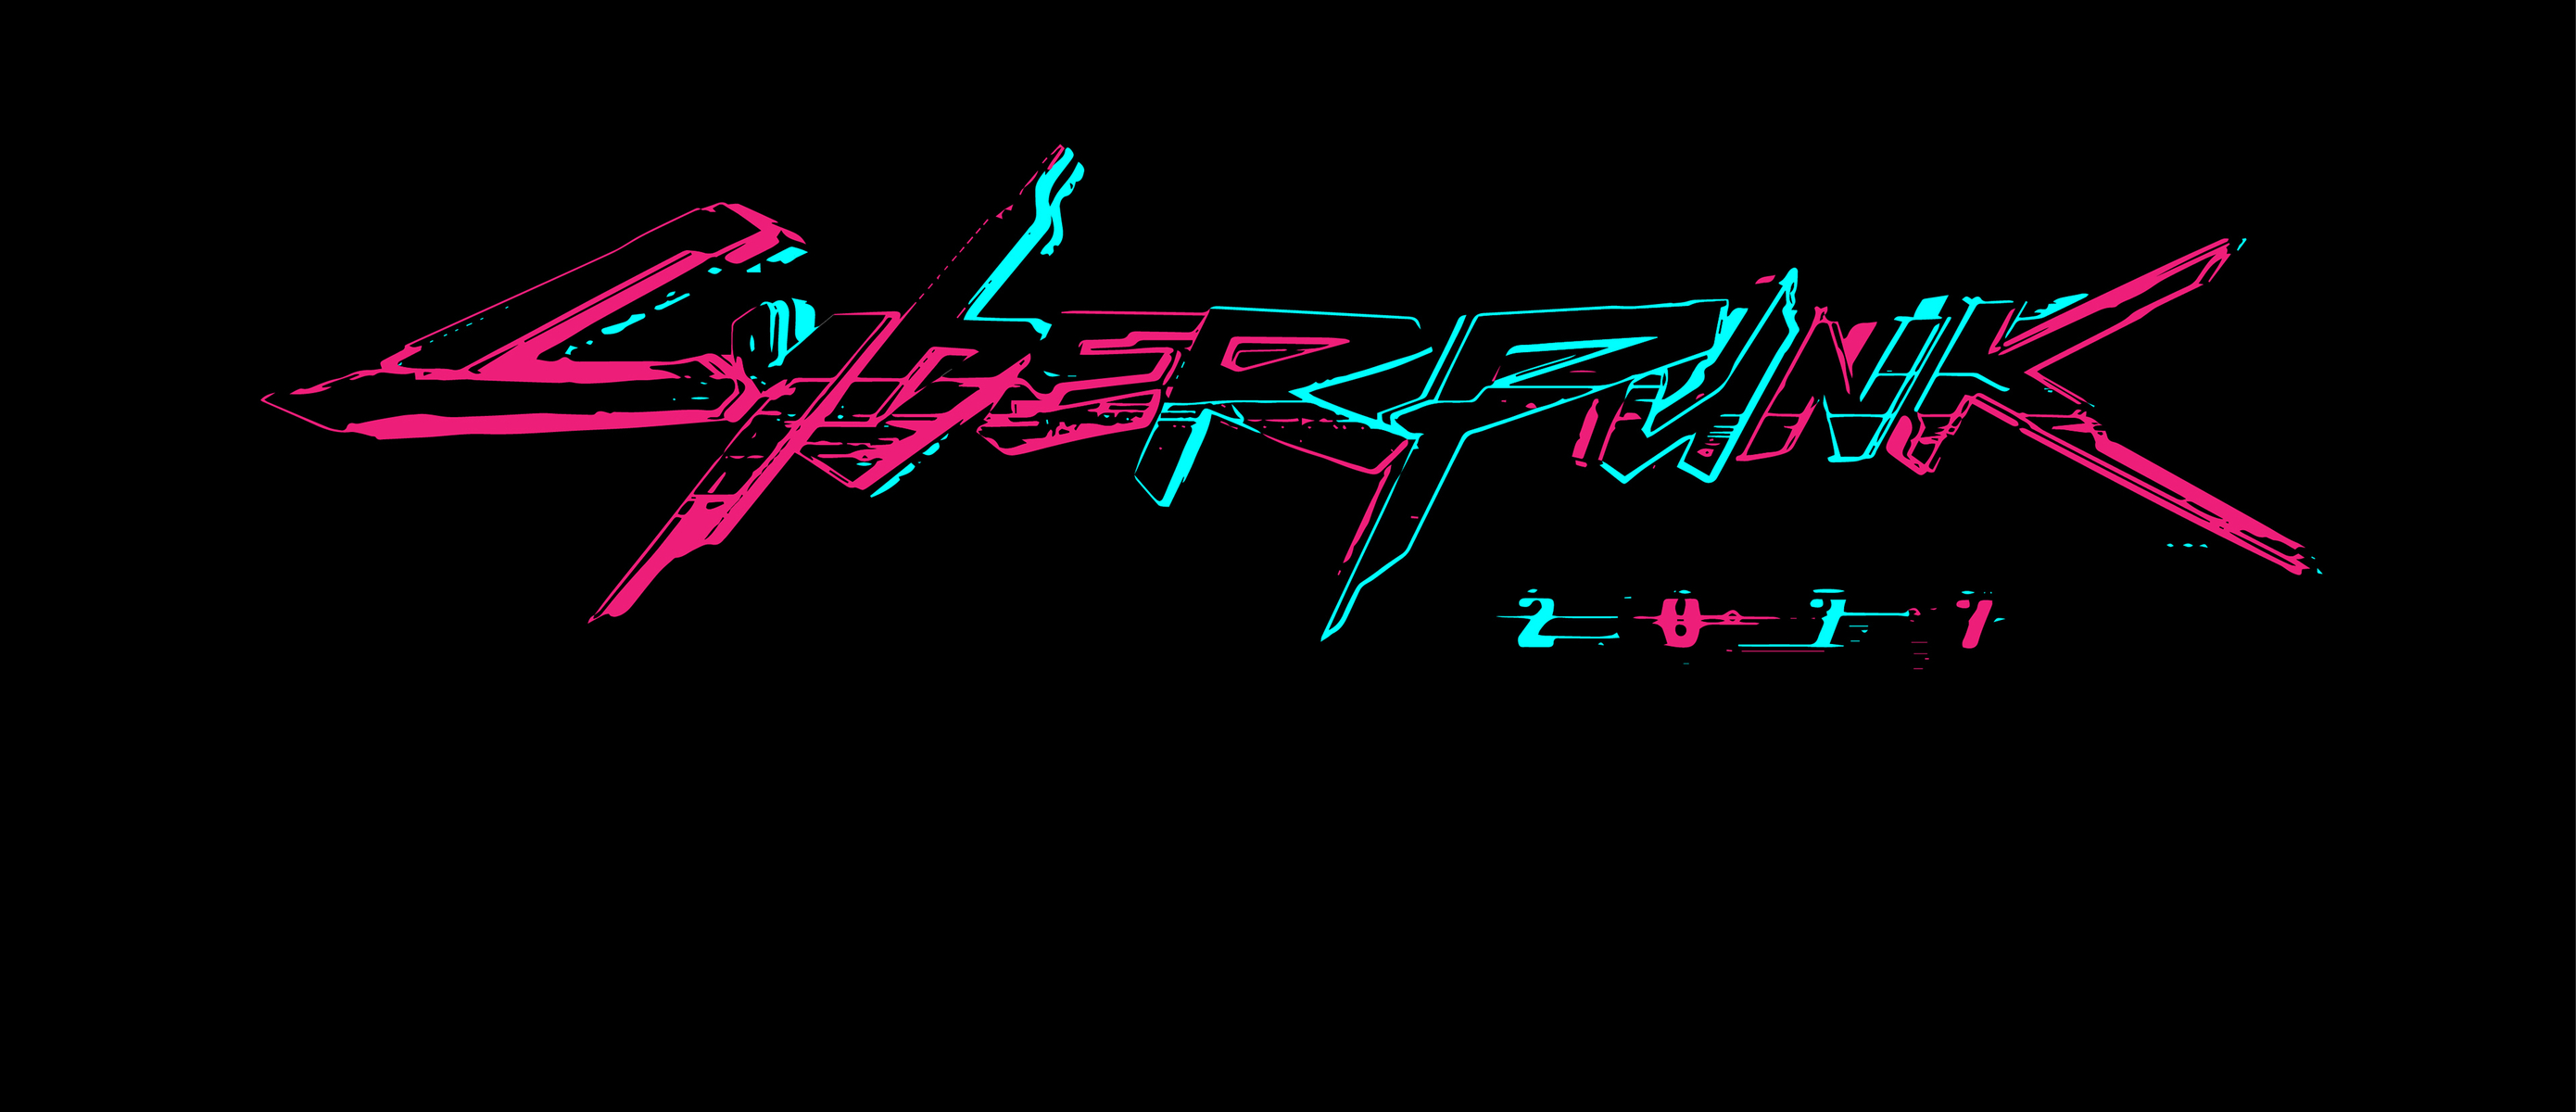 Cyberpunk font generator фото 42